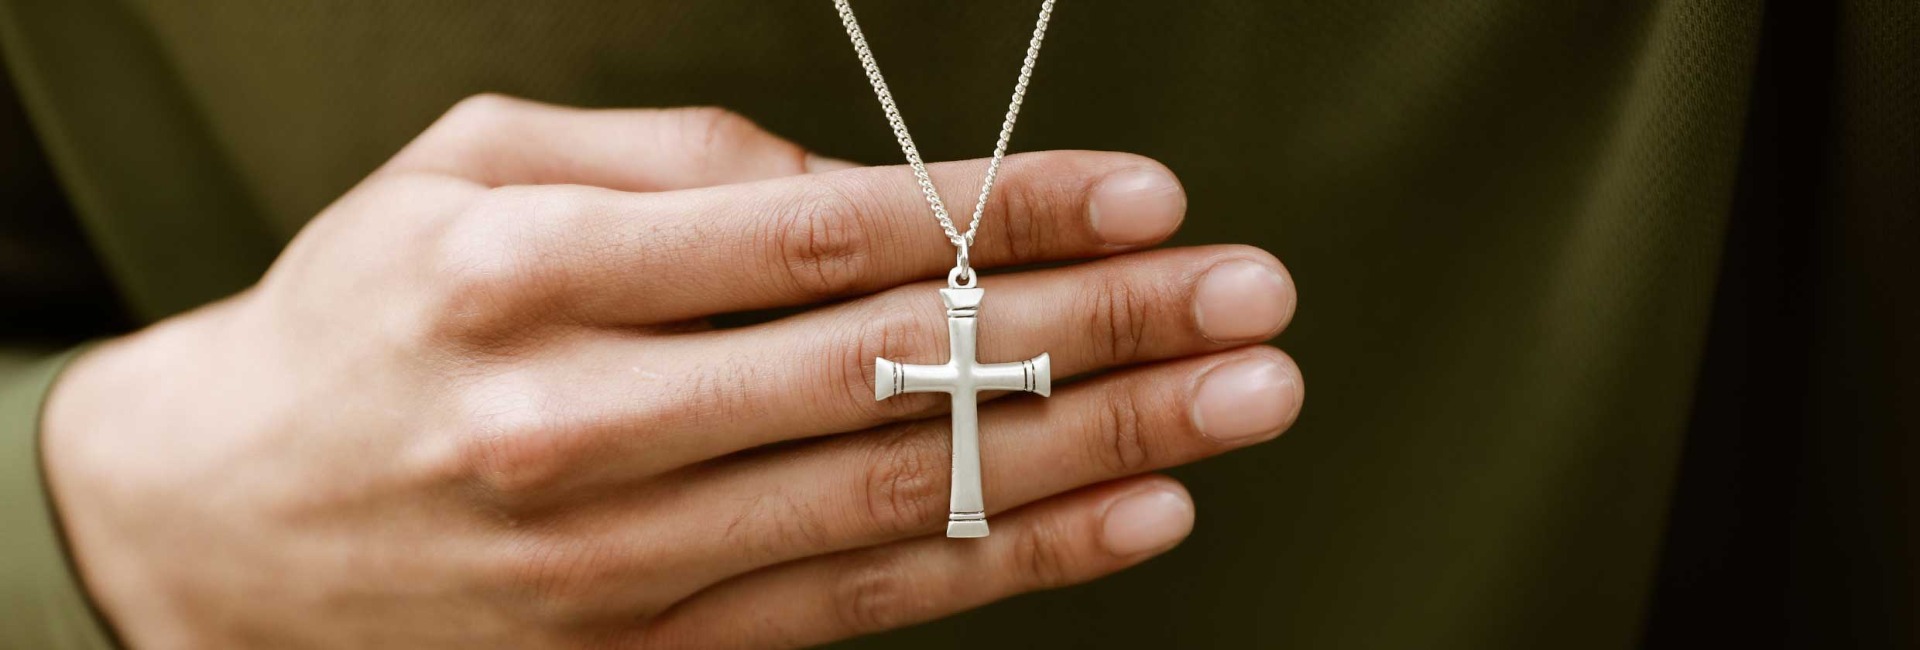 Chosen Cross Necklace by Stephen David Leonard